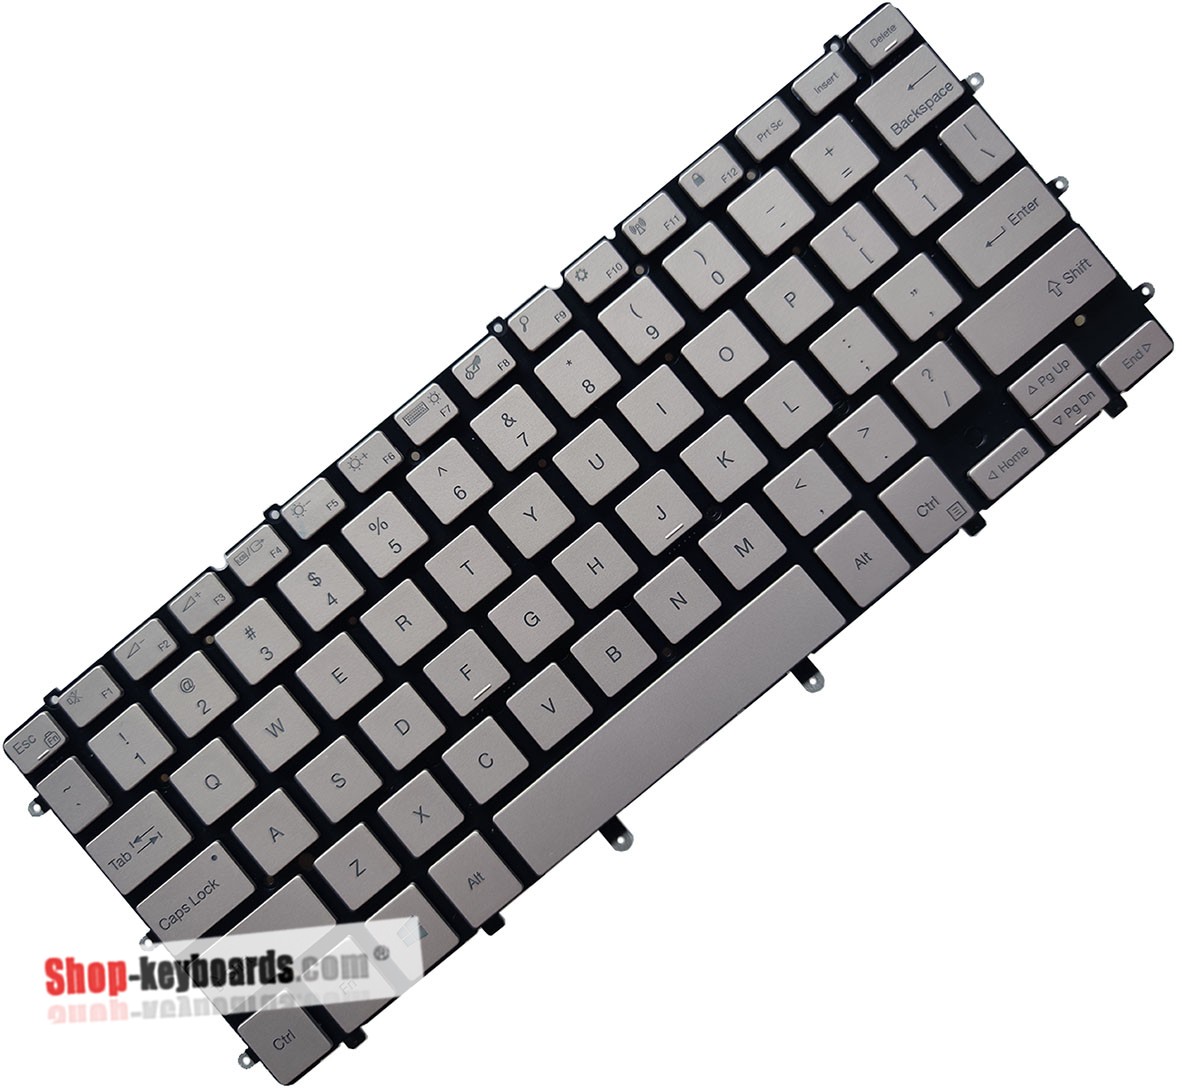 Darfon NSK-EM1BQ Keyboard replacement